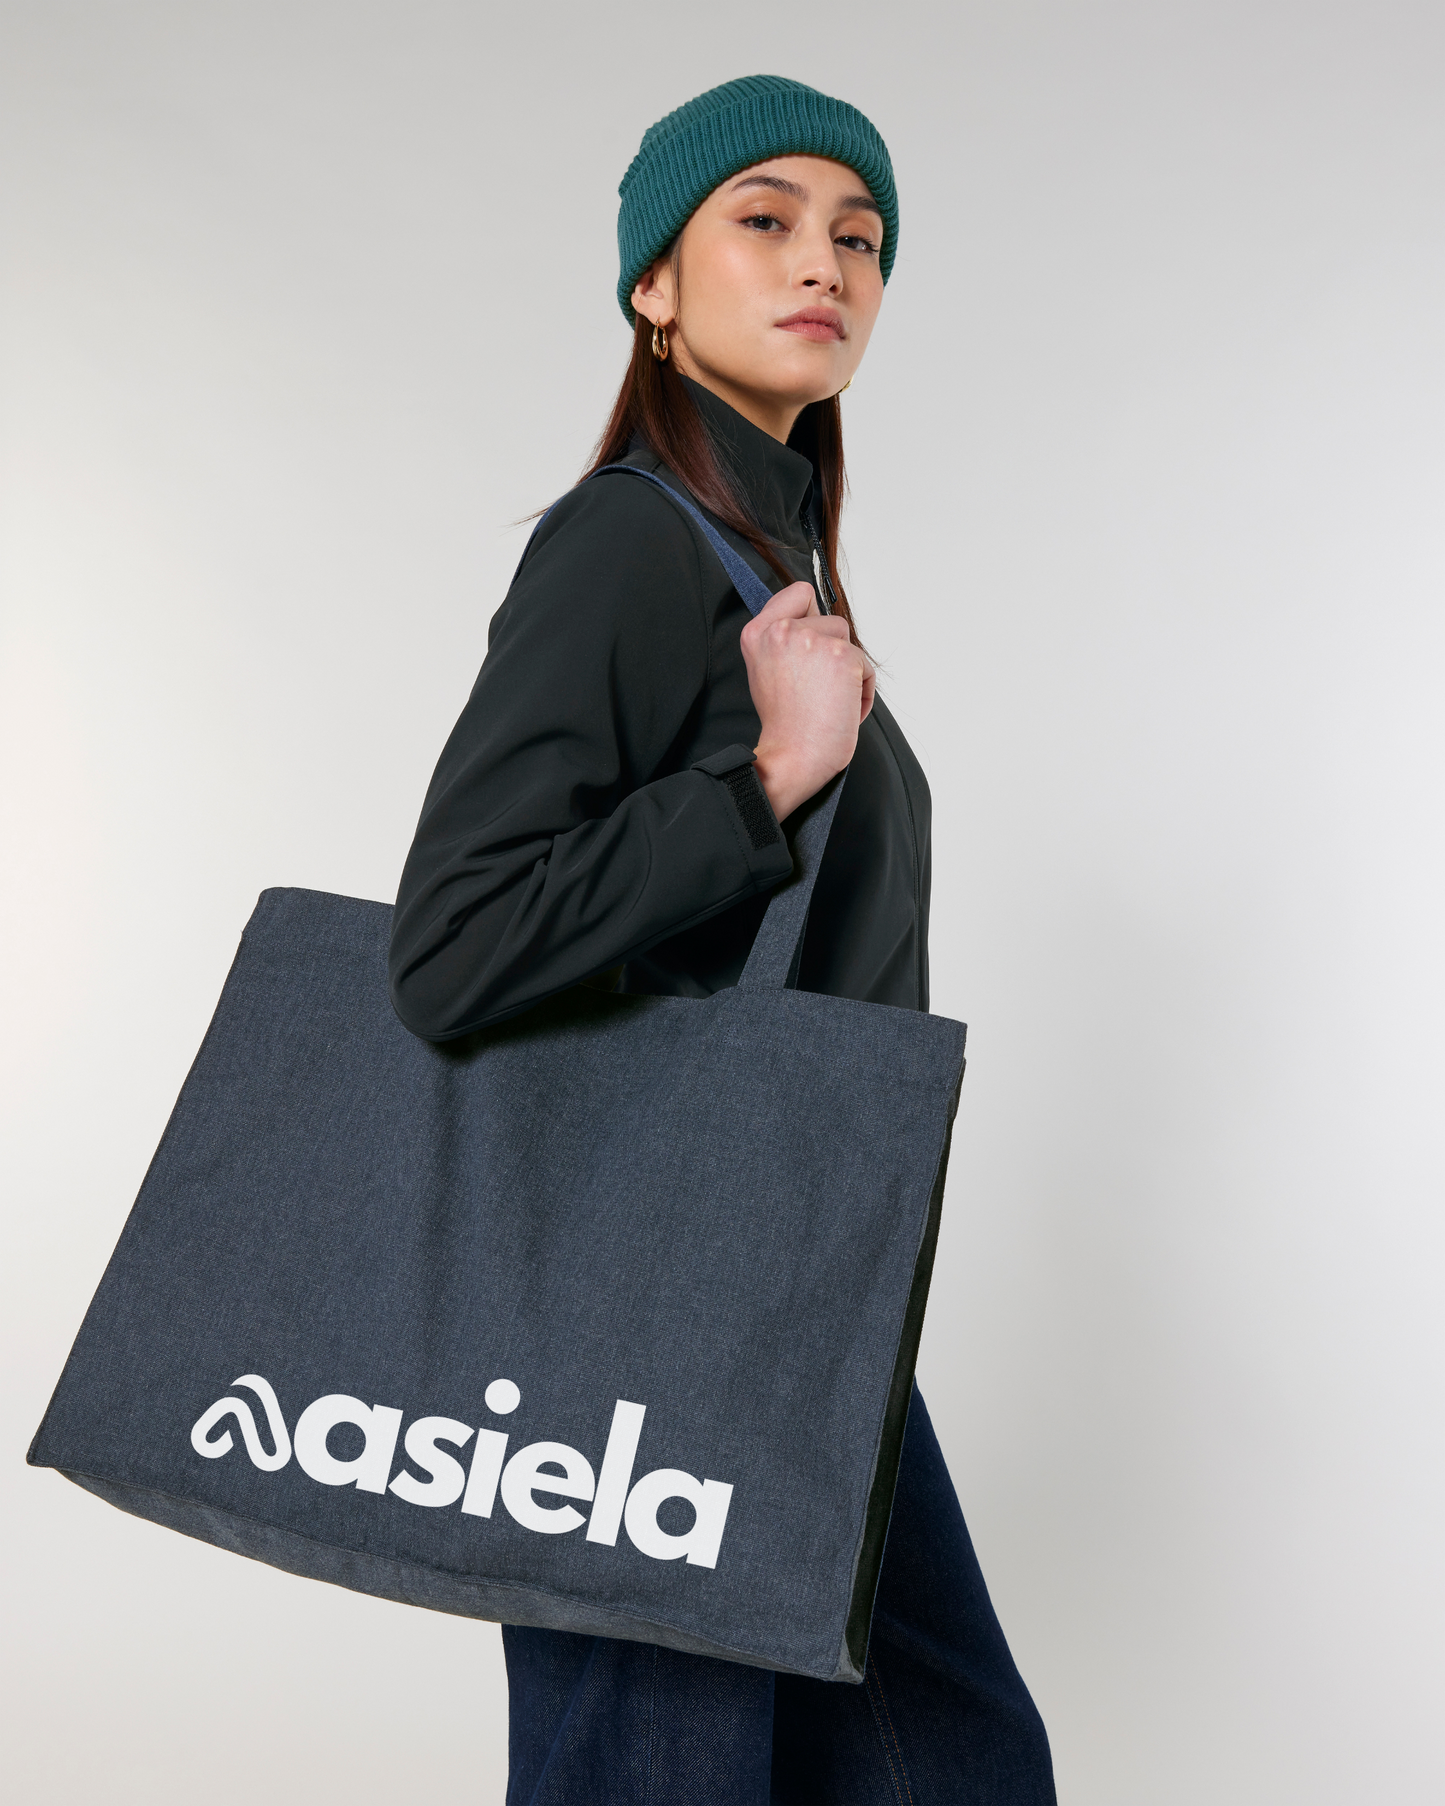 Asiela Shopping Bag - Black